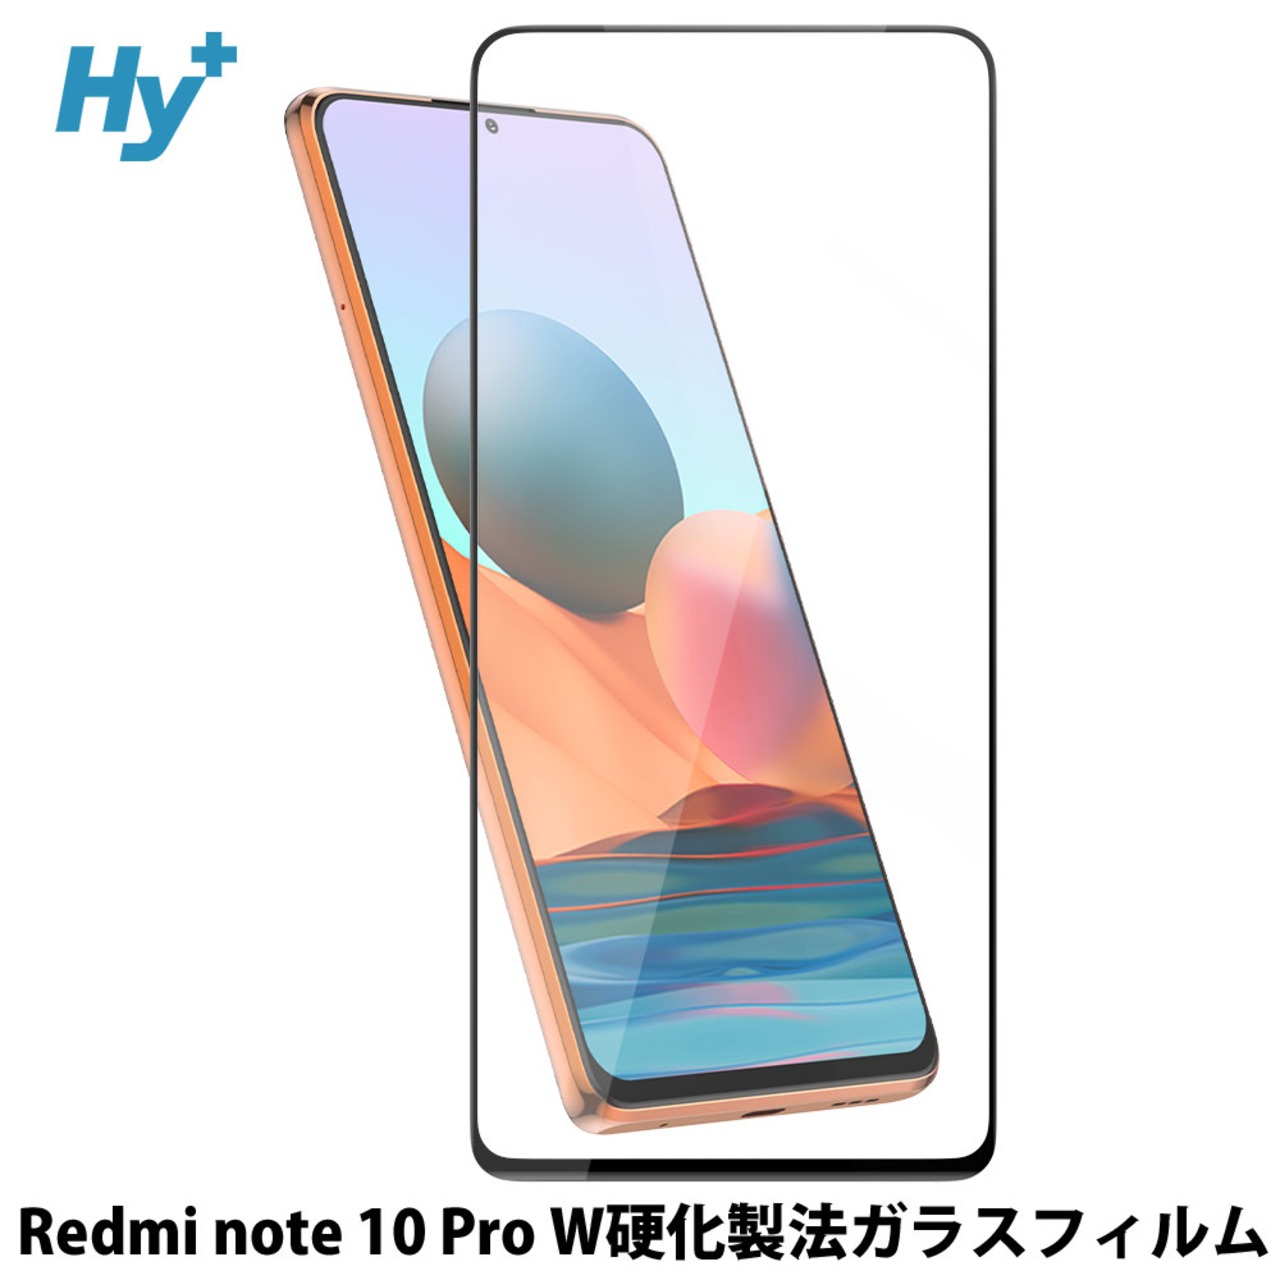 Hy+ Redmi note 10 Pro フィルム ガラスフィルム W硬化製法 一般ガラスの3倍強度 全面保護 全面吸着 日本産ガラス使用 厚み0.33mm ブラック